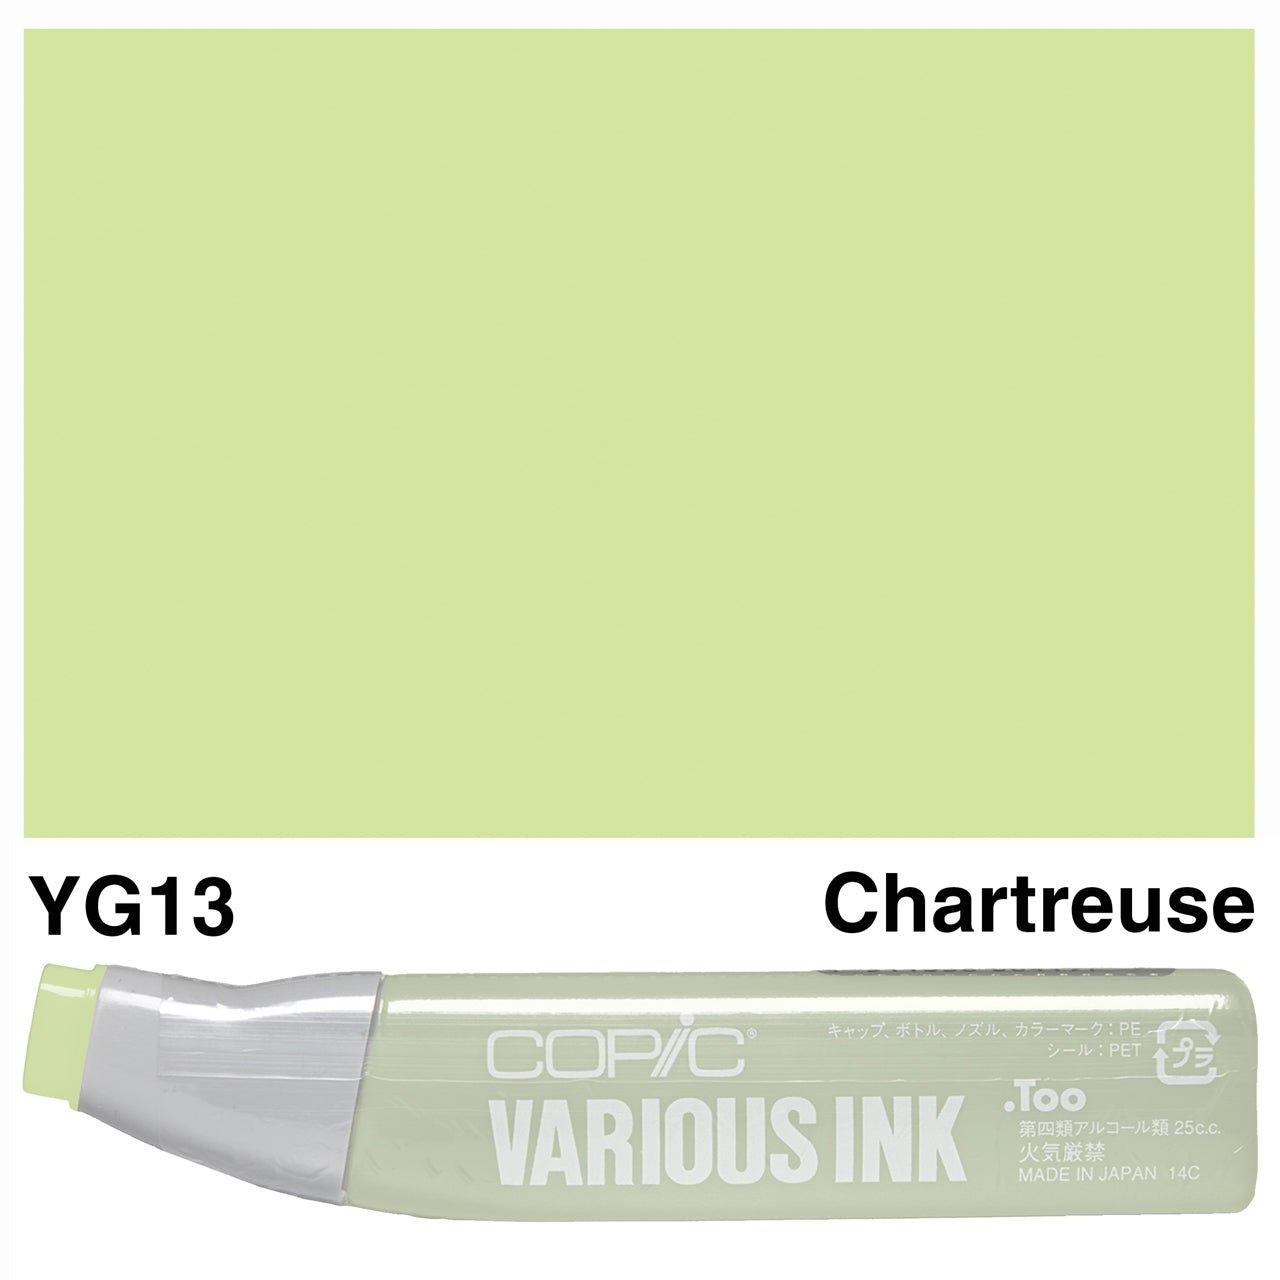 Copic Various Ink YG13 Chartreuse - theartshop.com.au